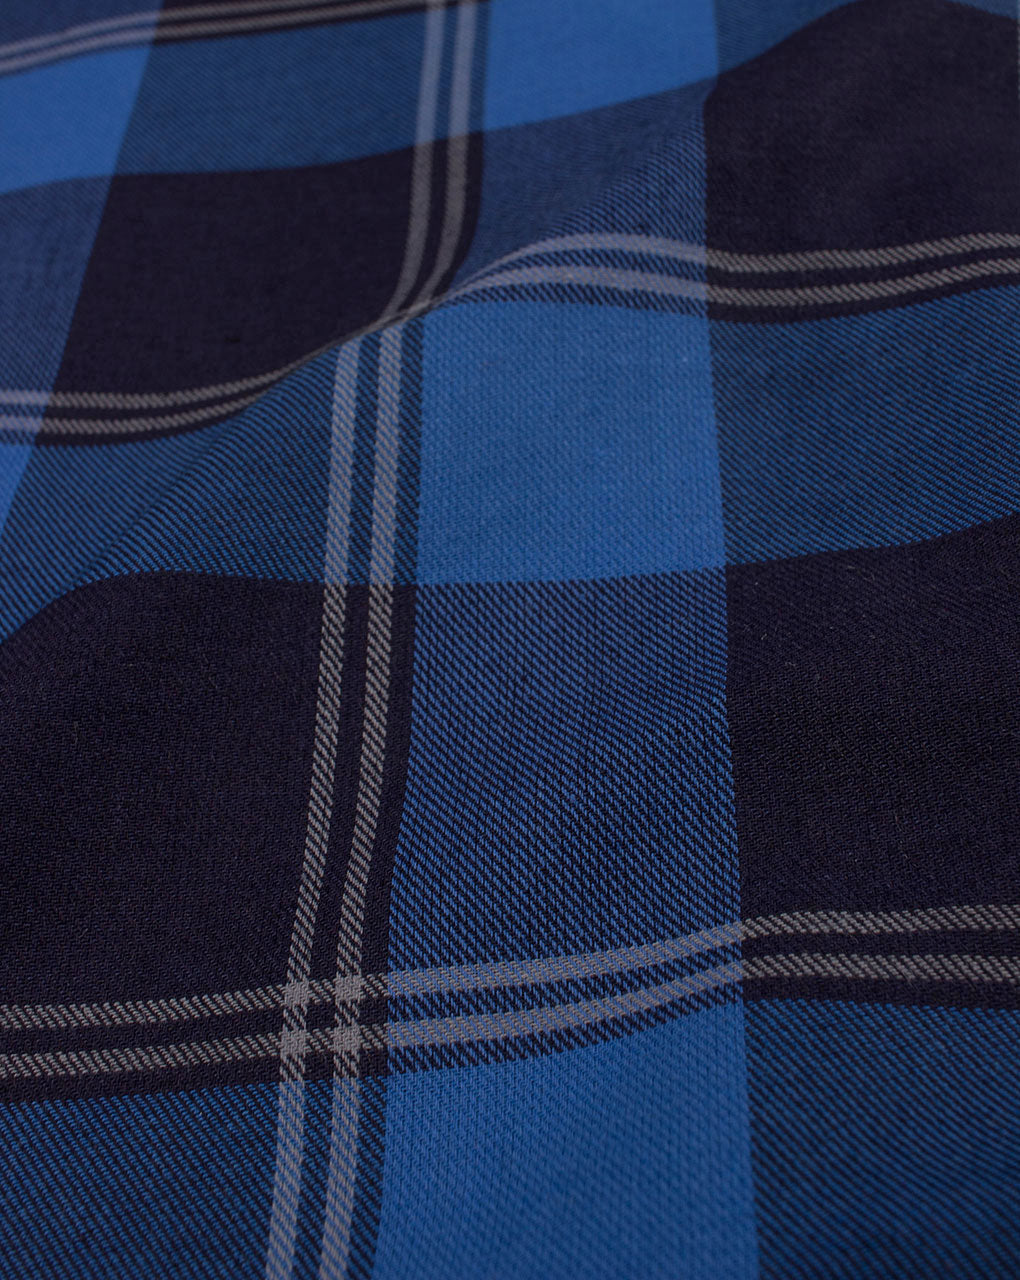 Woven Azo Free Dye indigo Checks Fabric ( Width 56 Inch ) - Fabriclore.com